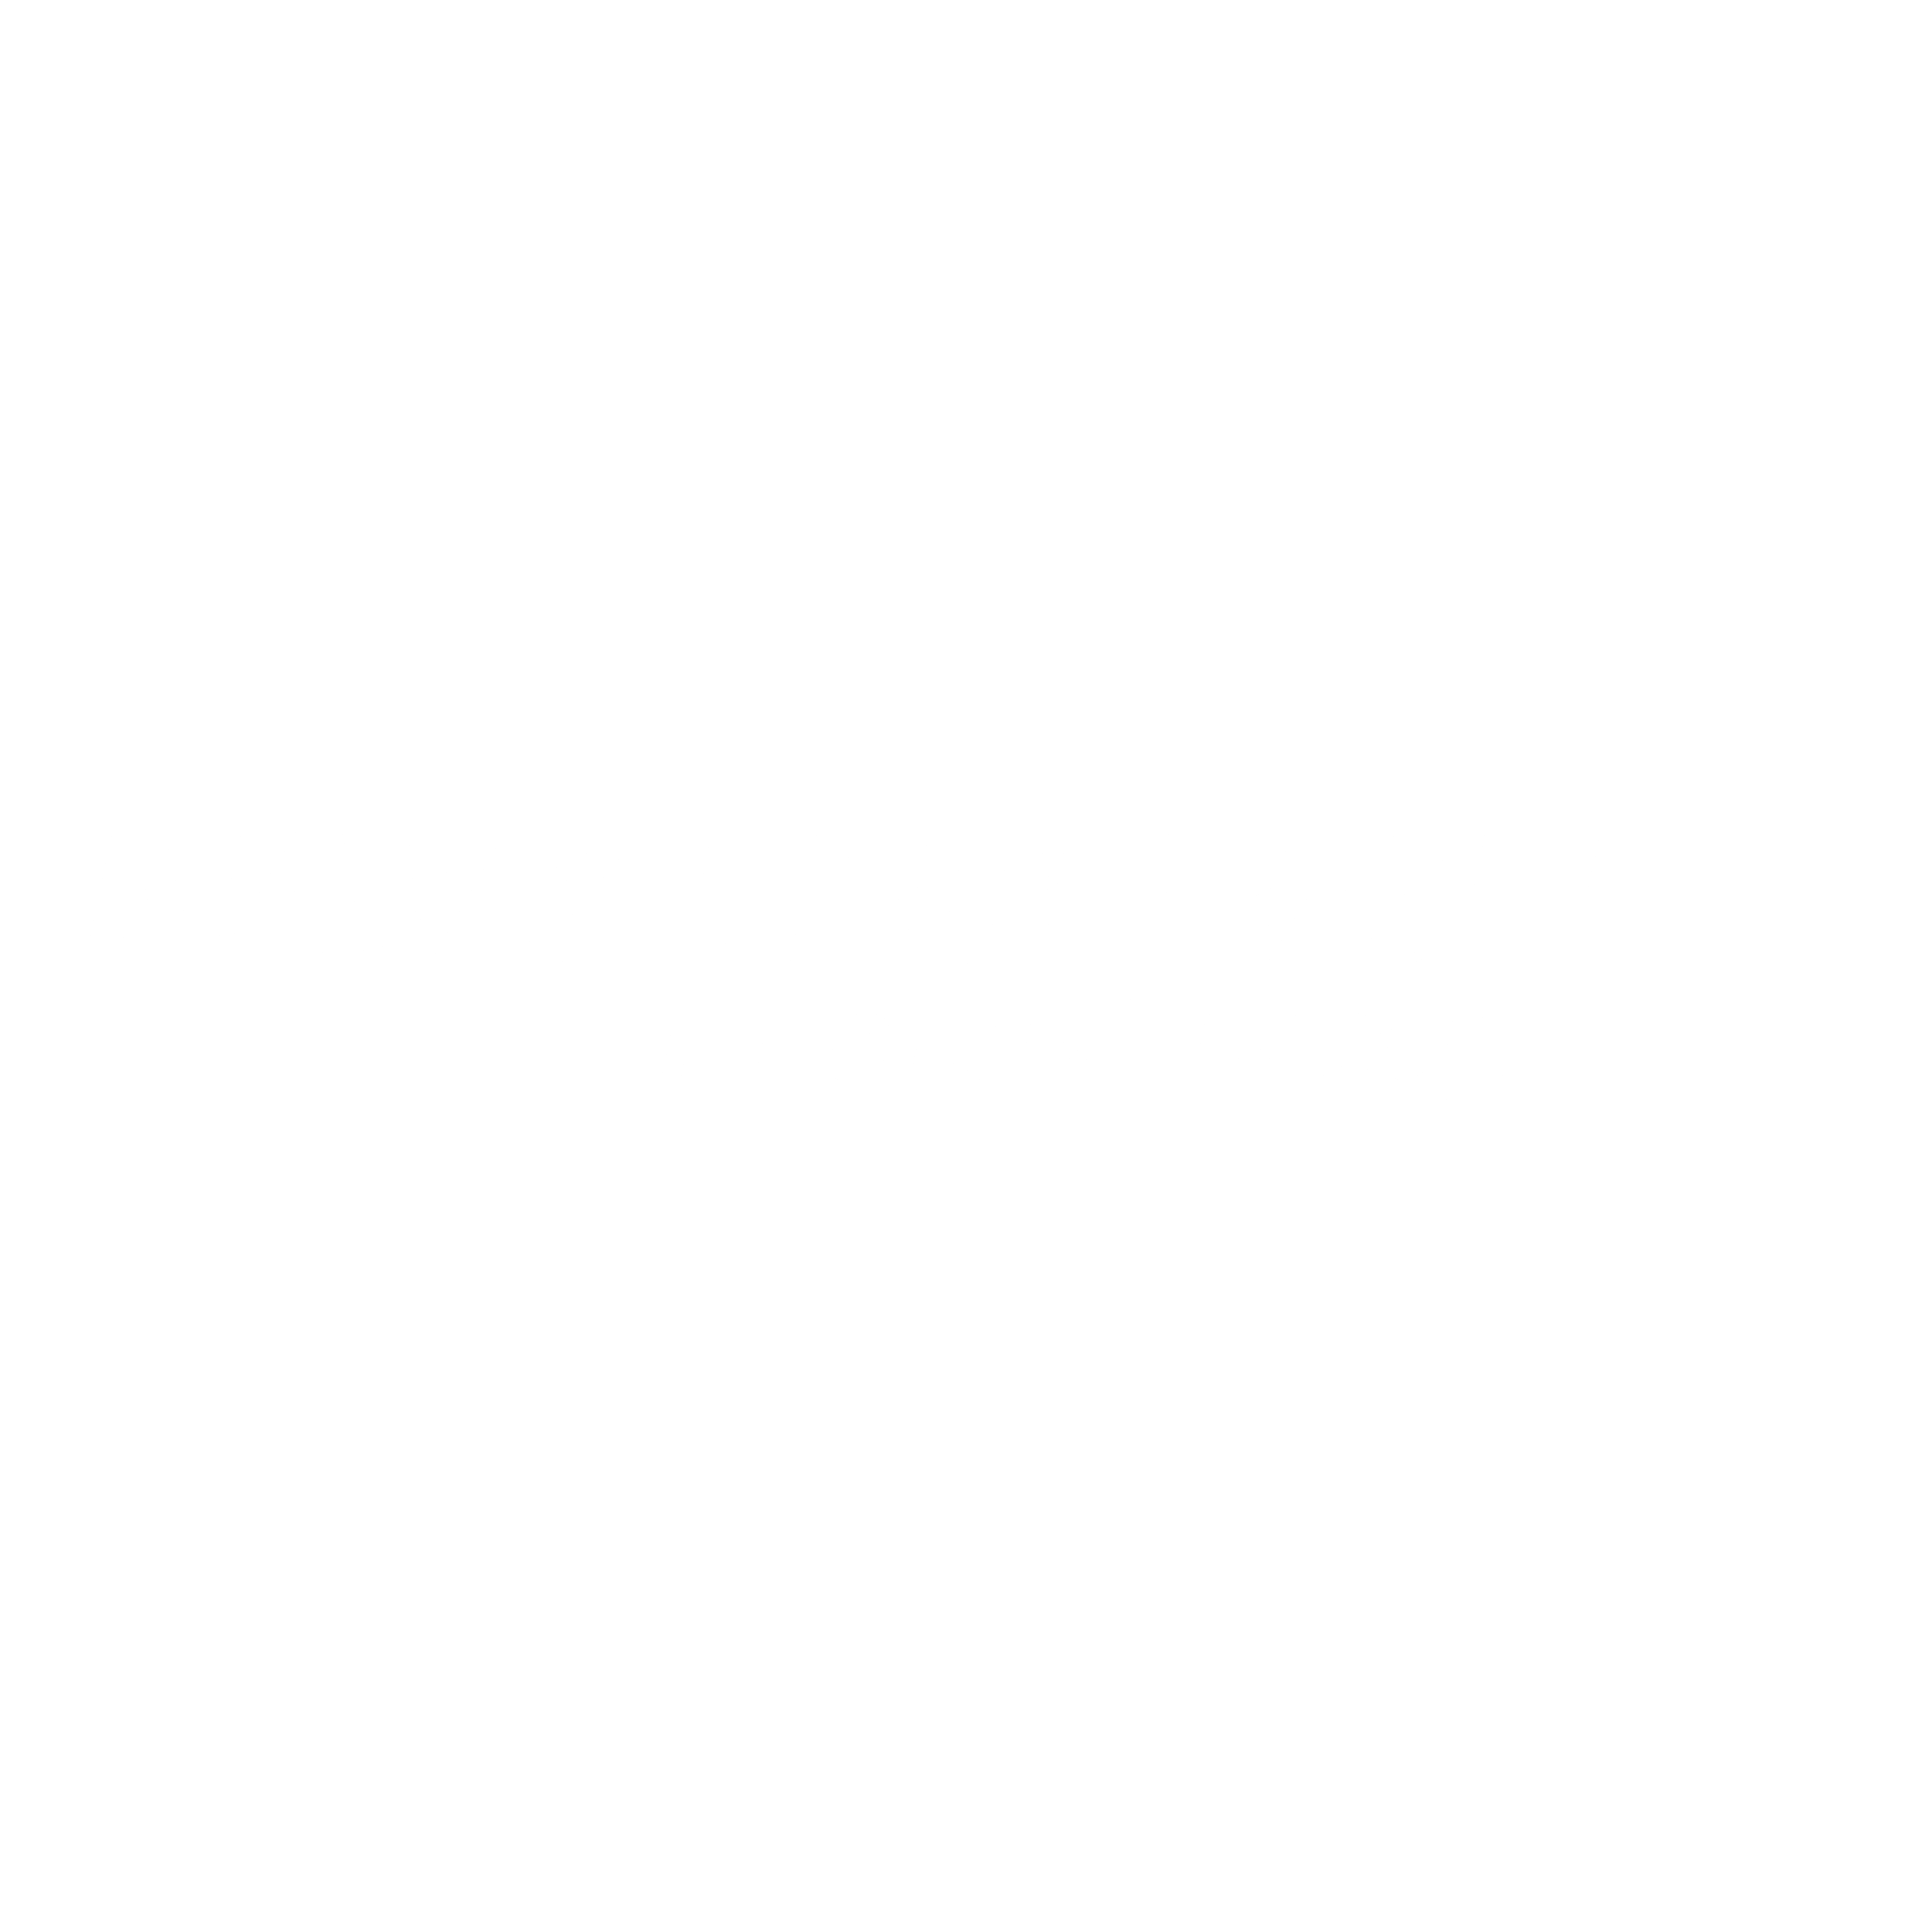 Navy Federal Logo - Navy Federal Logo PNG Transparent & SVG Vector - Freebie Supply